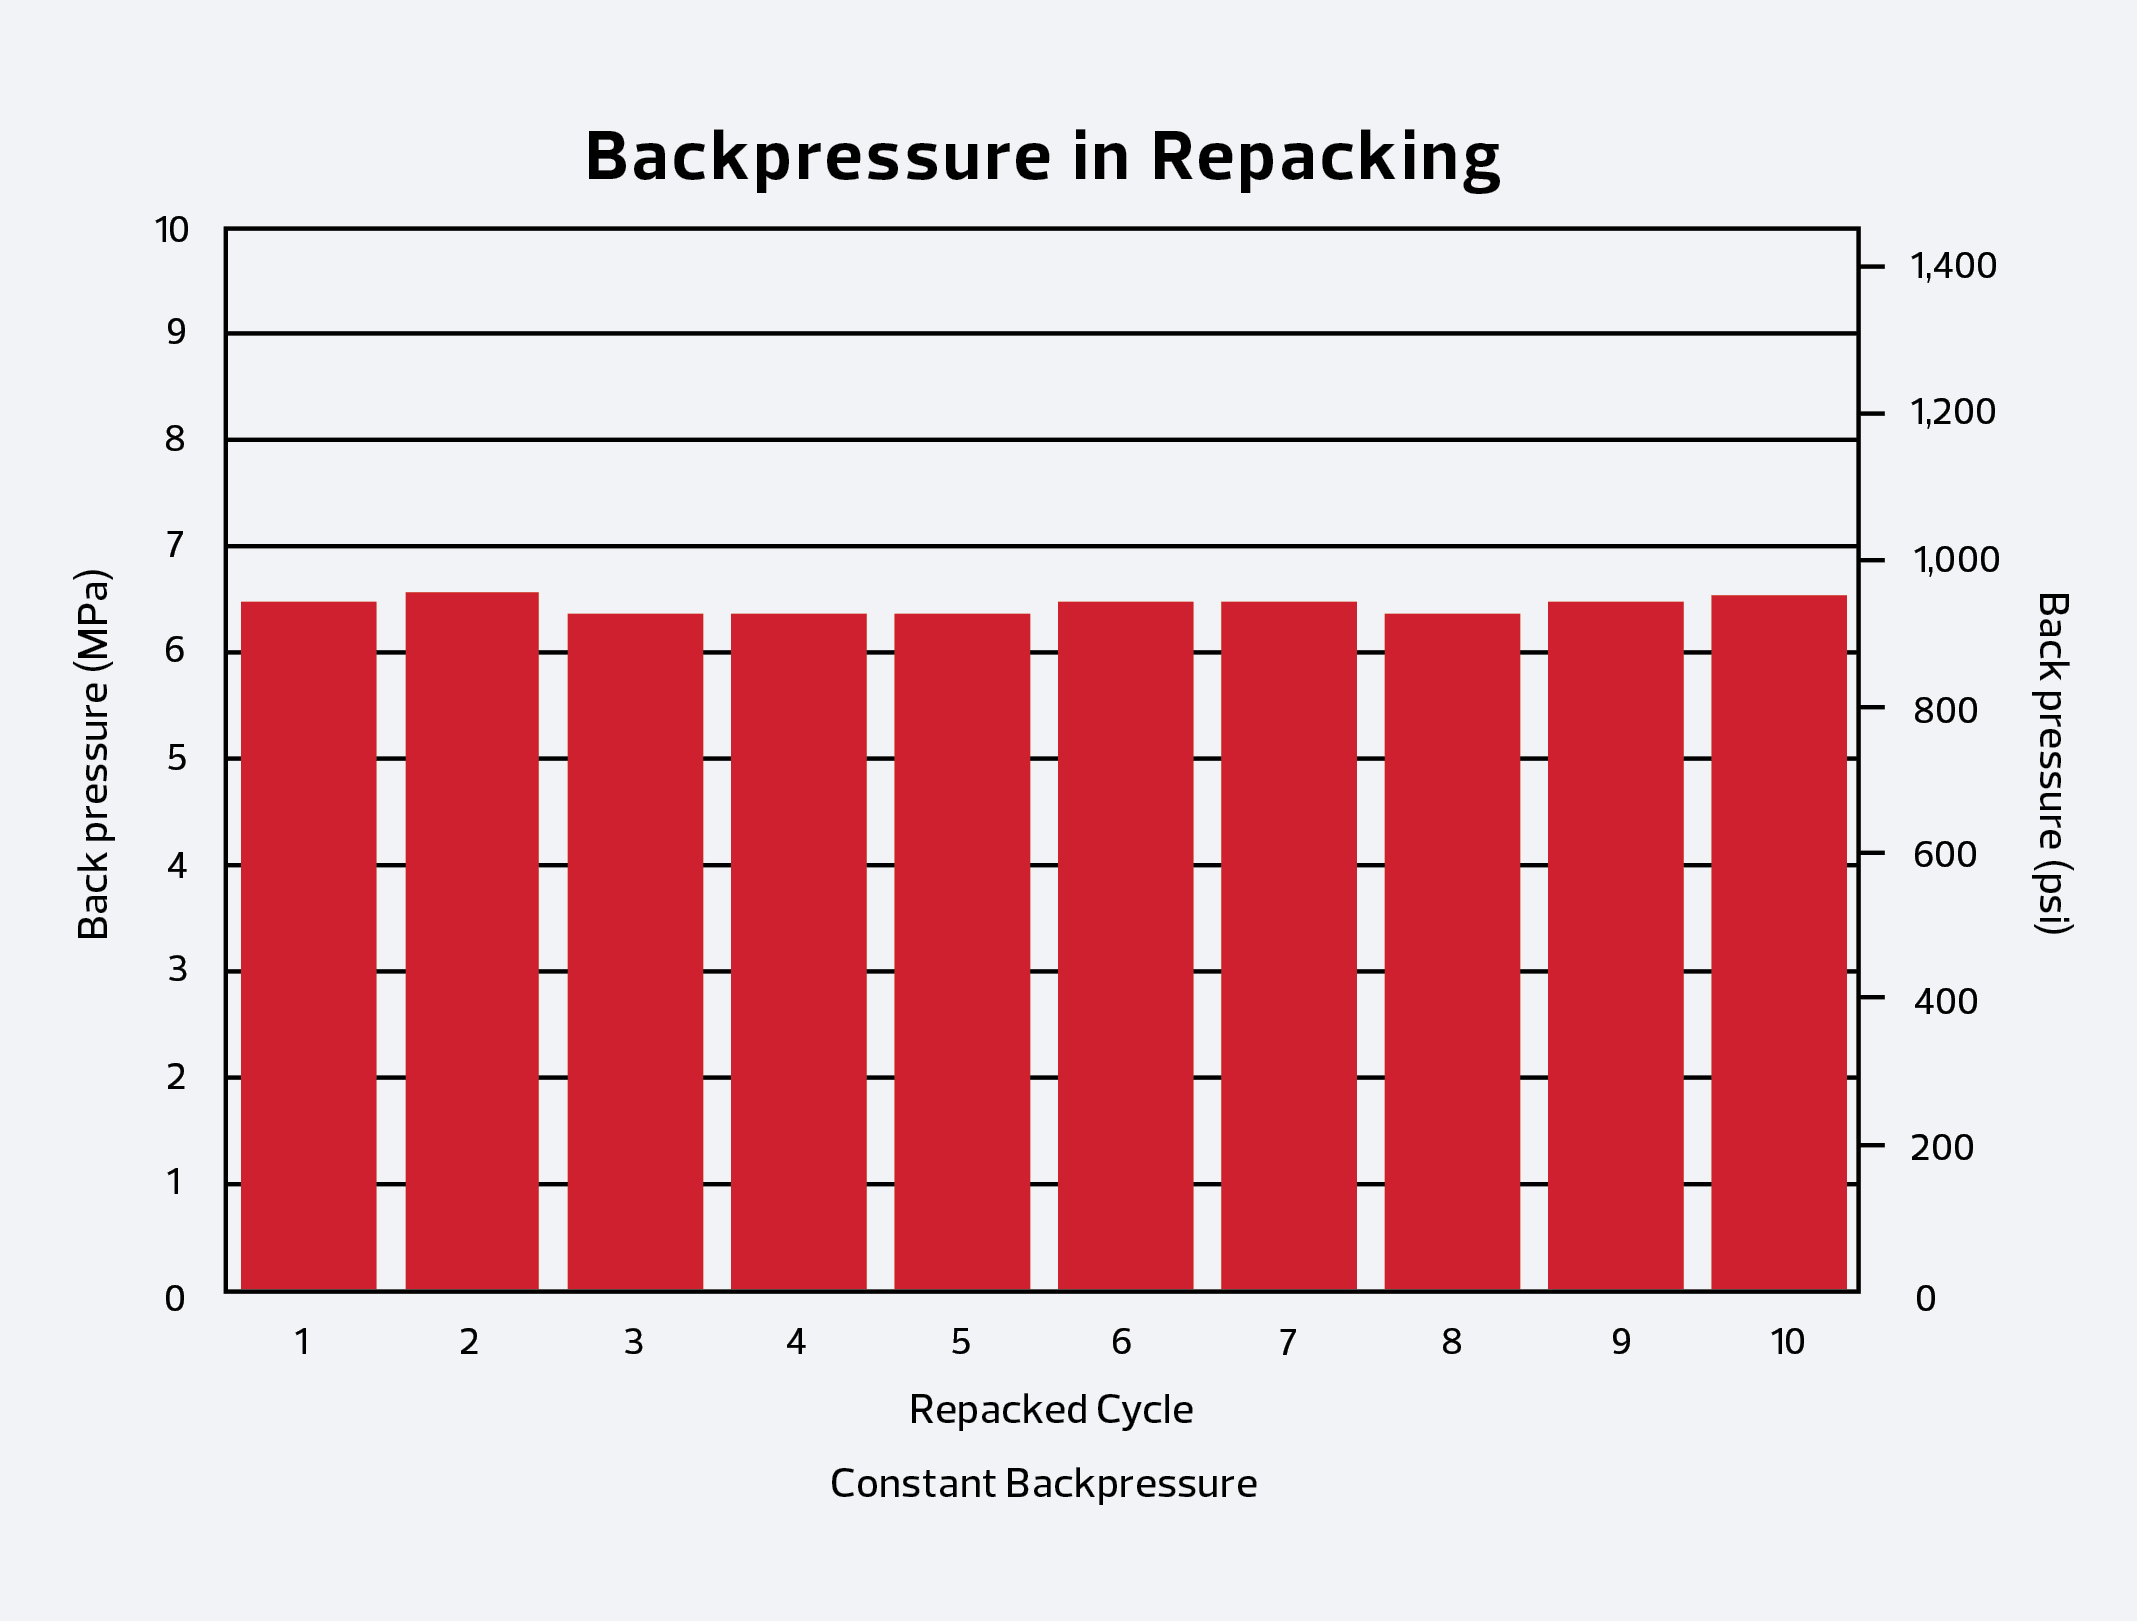 Backpressure in Repacking